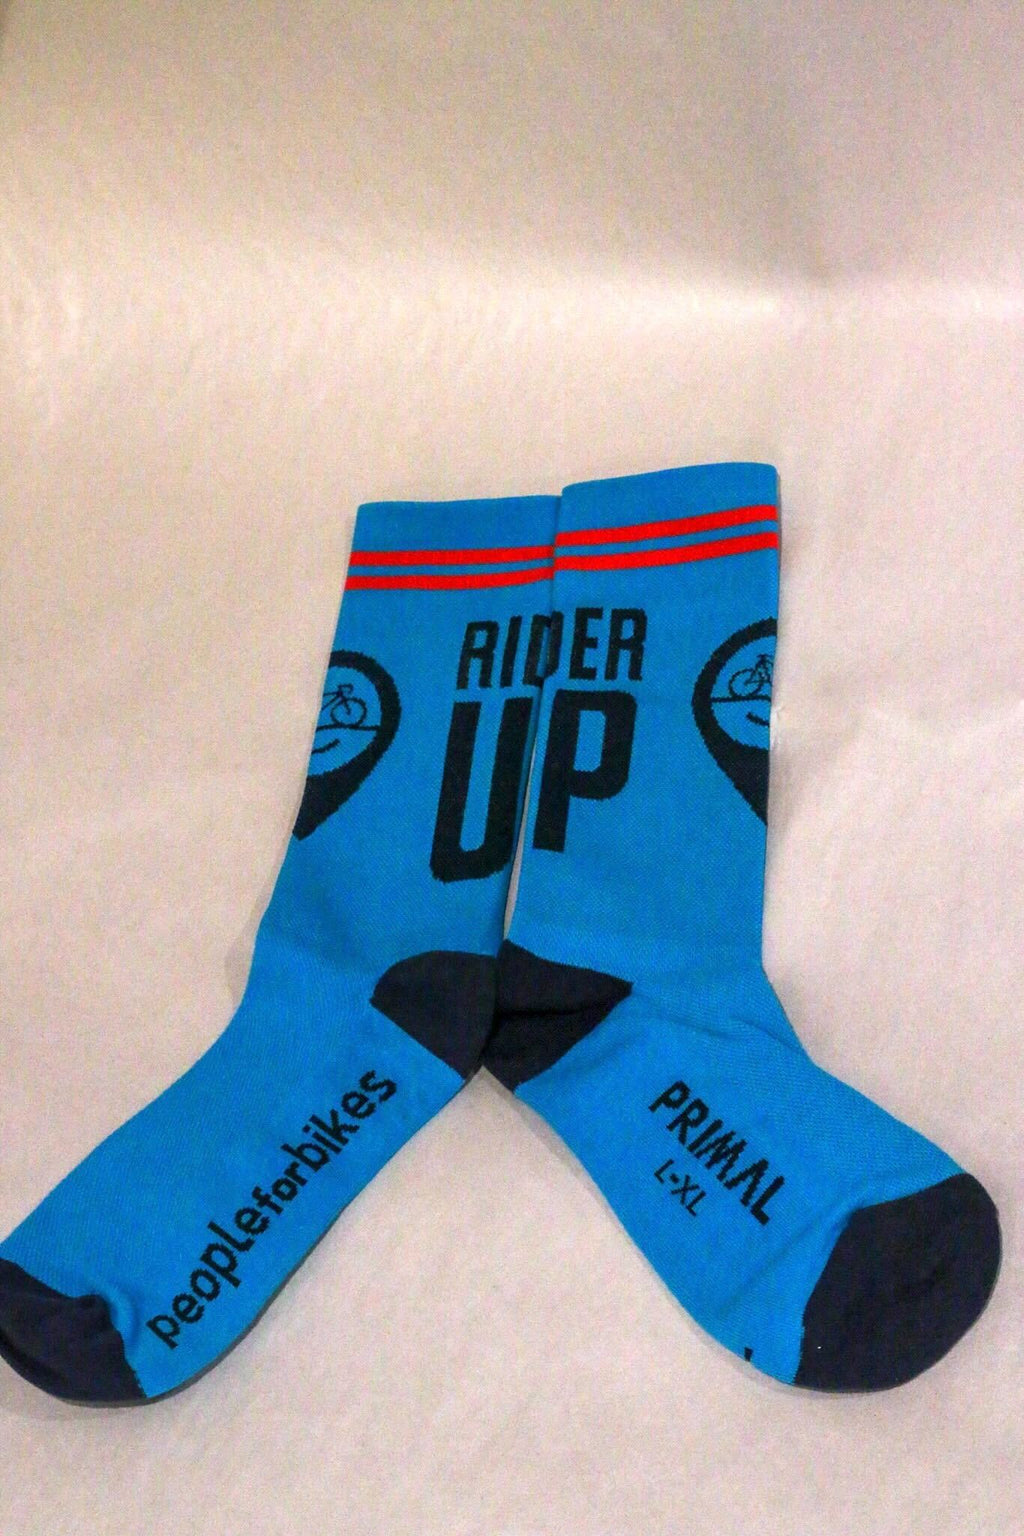 PeopleForBikes Ride Spot "Rider Up" Socks